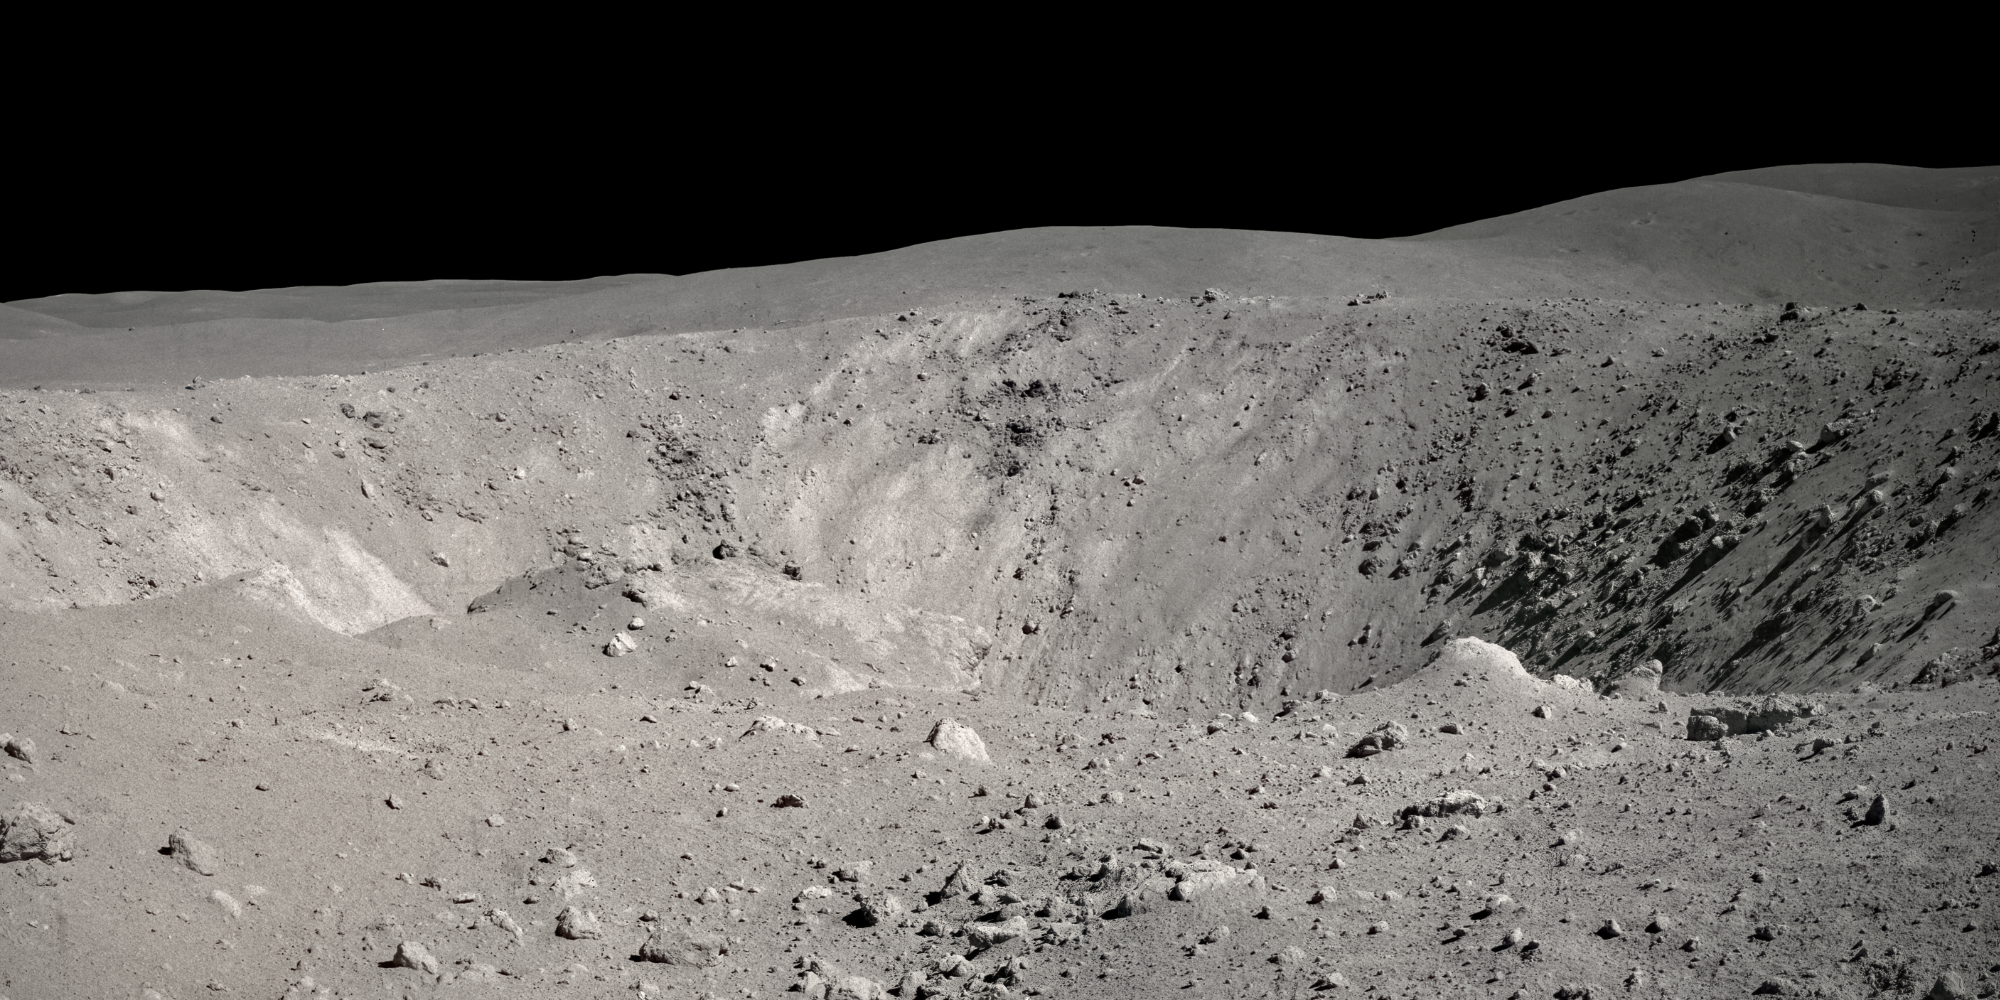 1972 Moon photo captured by Charlie Duke, upscaled with AI